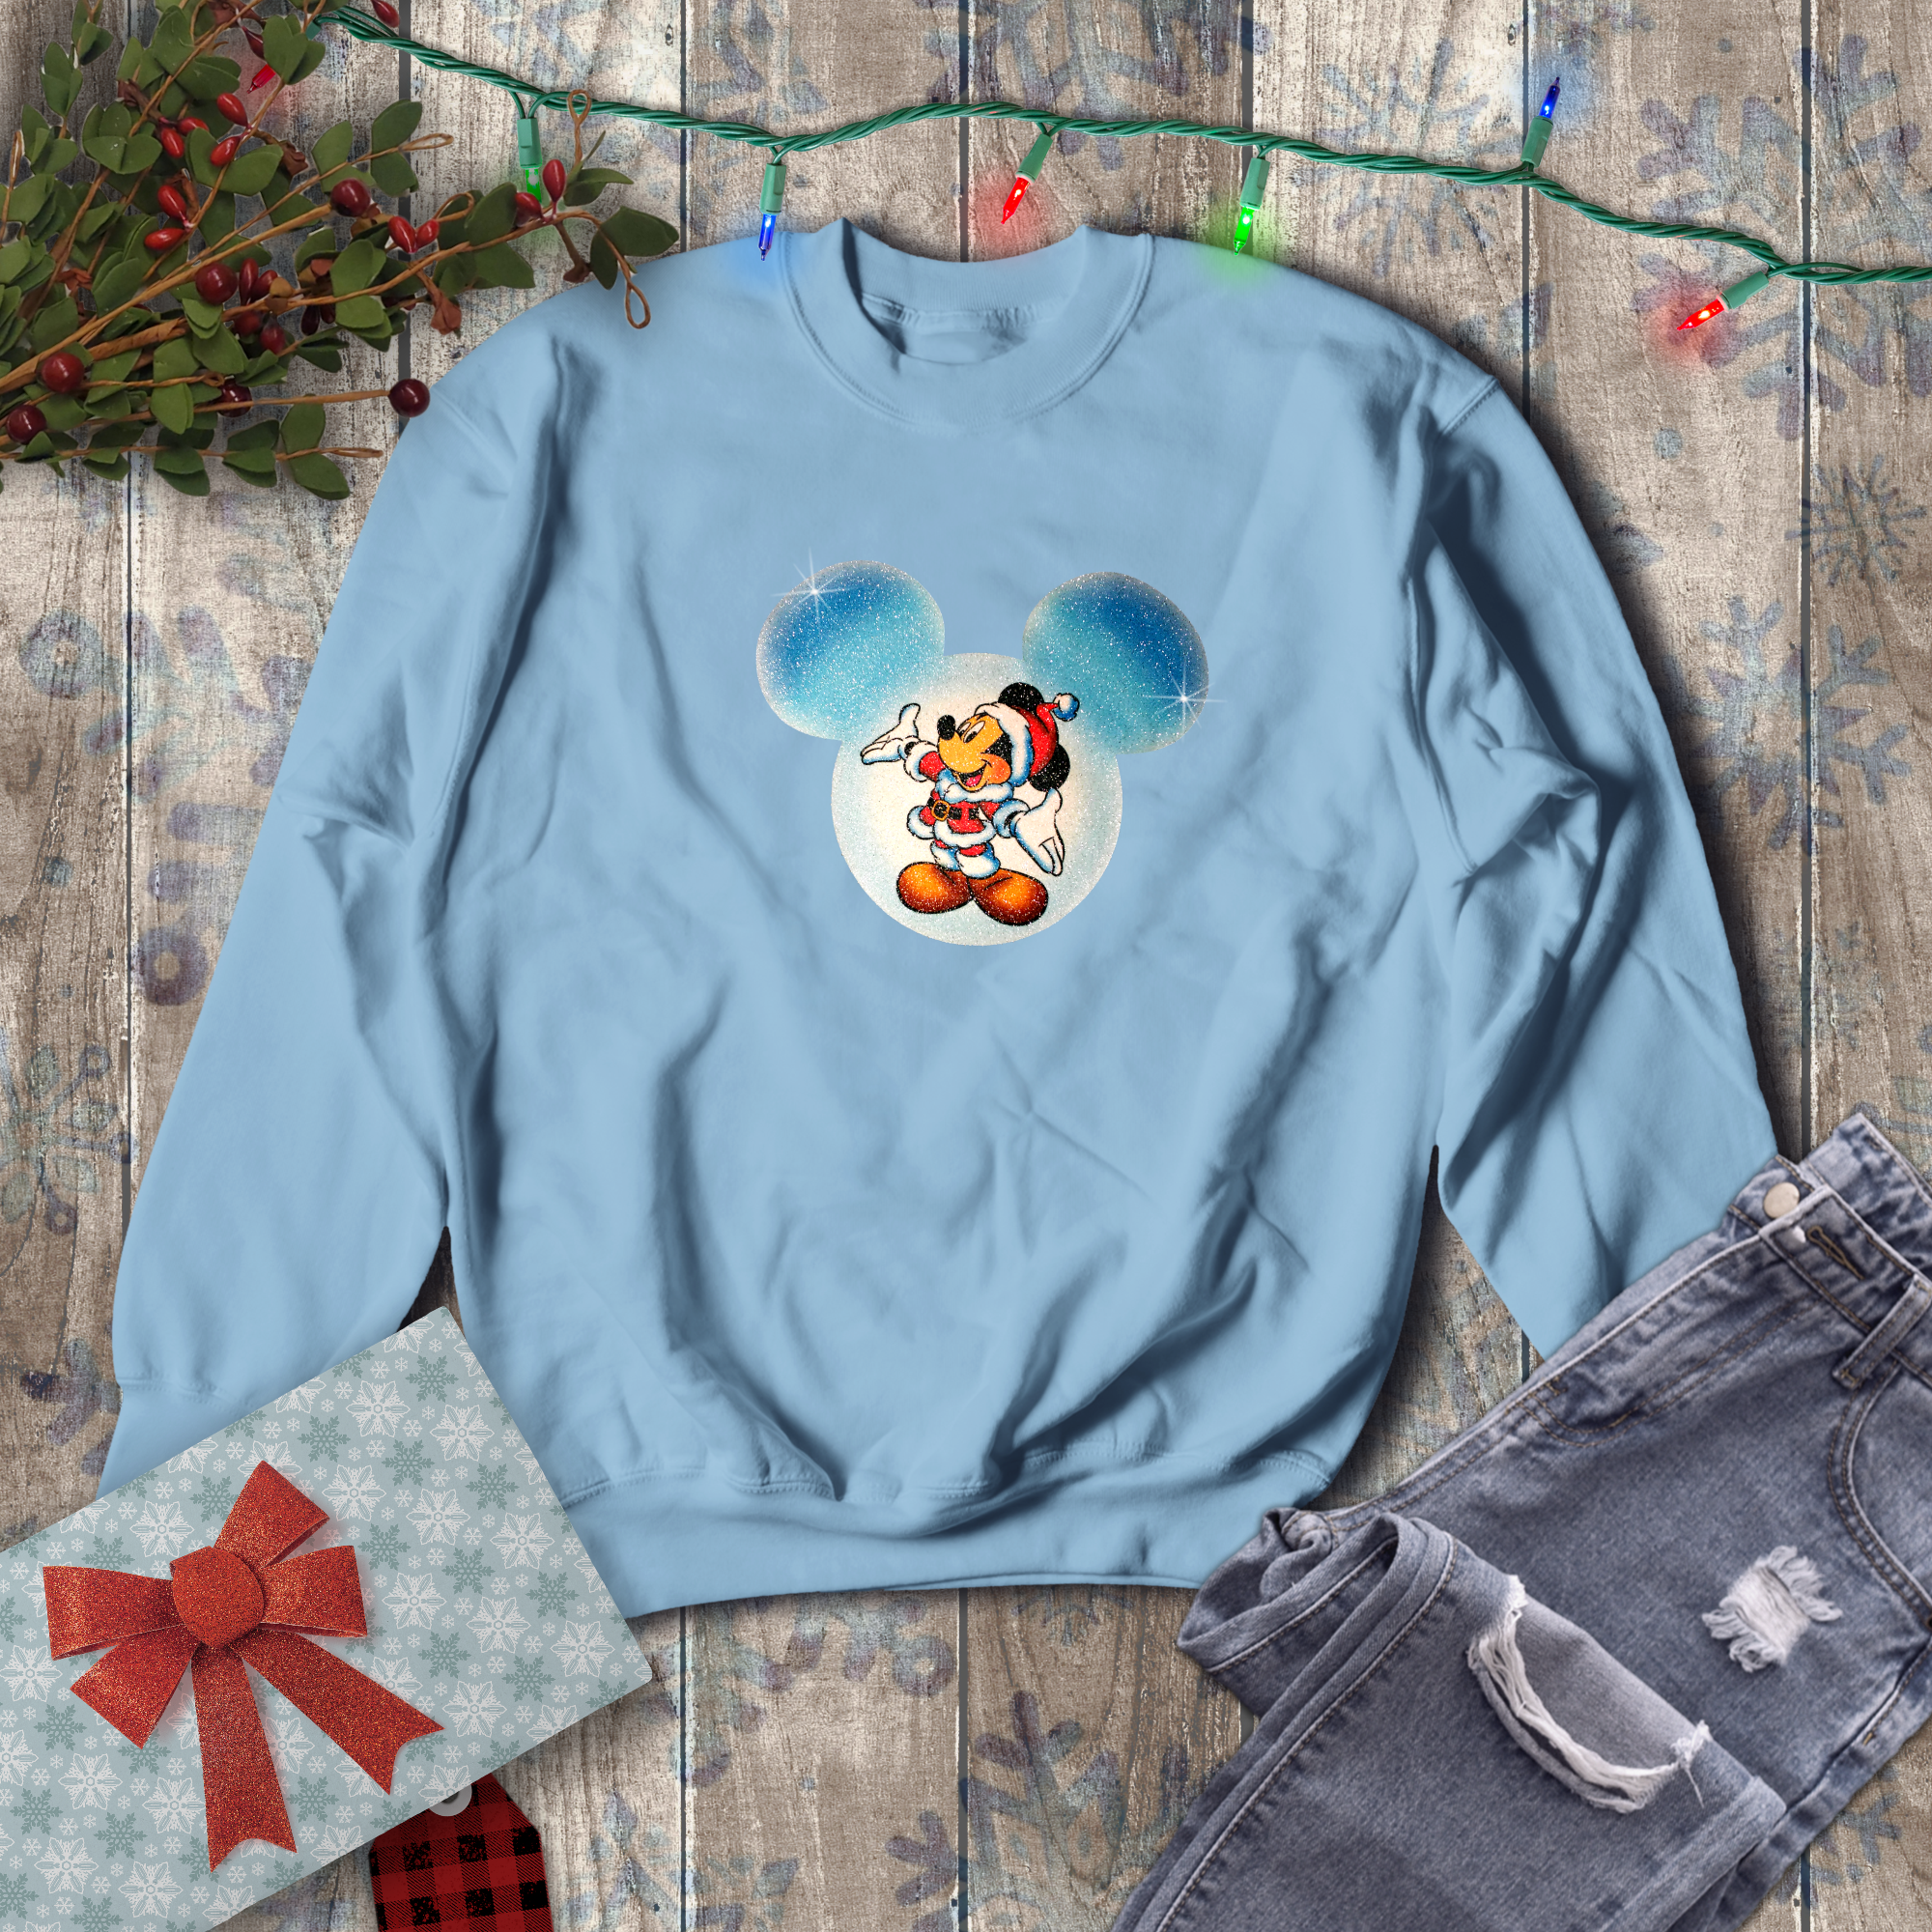 Disney Christmas Sweatshirt/ Peppermint Red Candy Swirl Shirt/ Mickey Mouse Holiday  Fleece Sweater